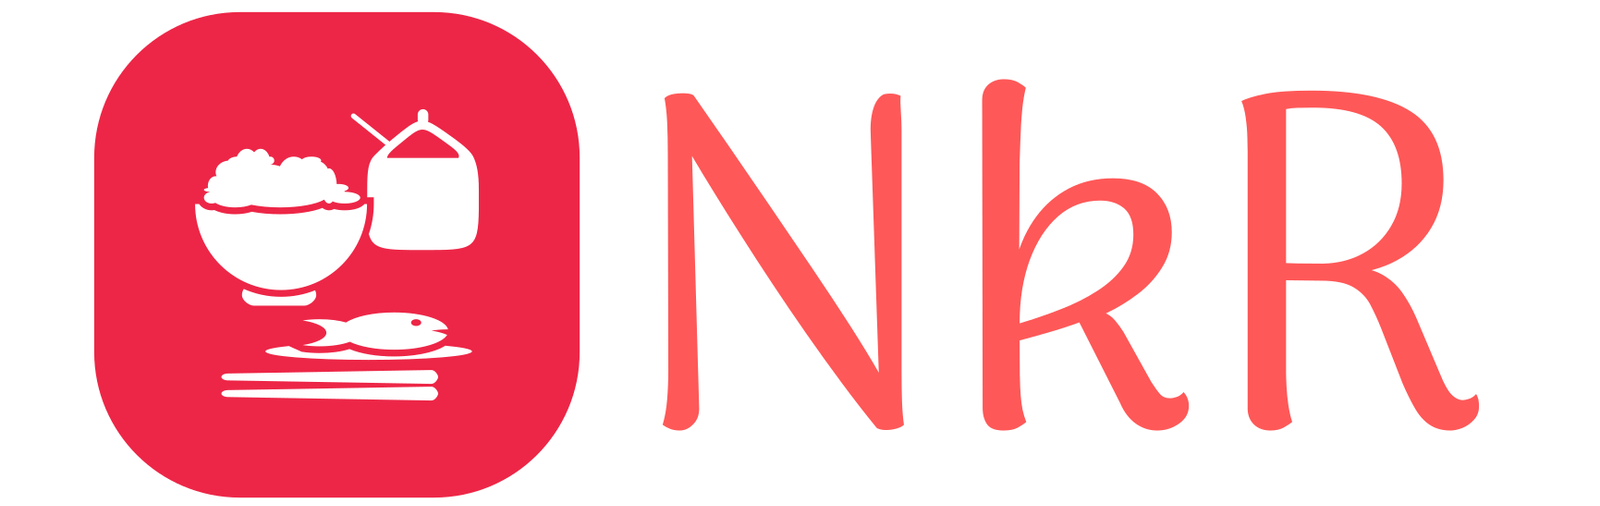 cropped nkr high resolution logo